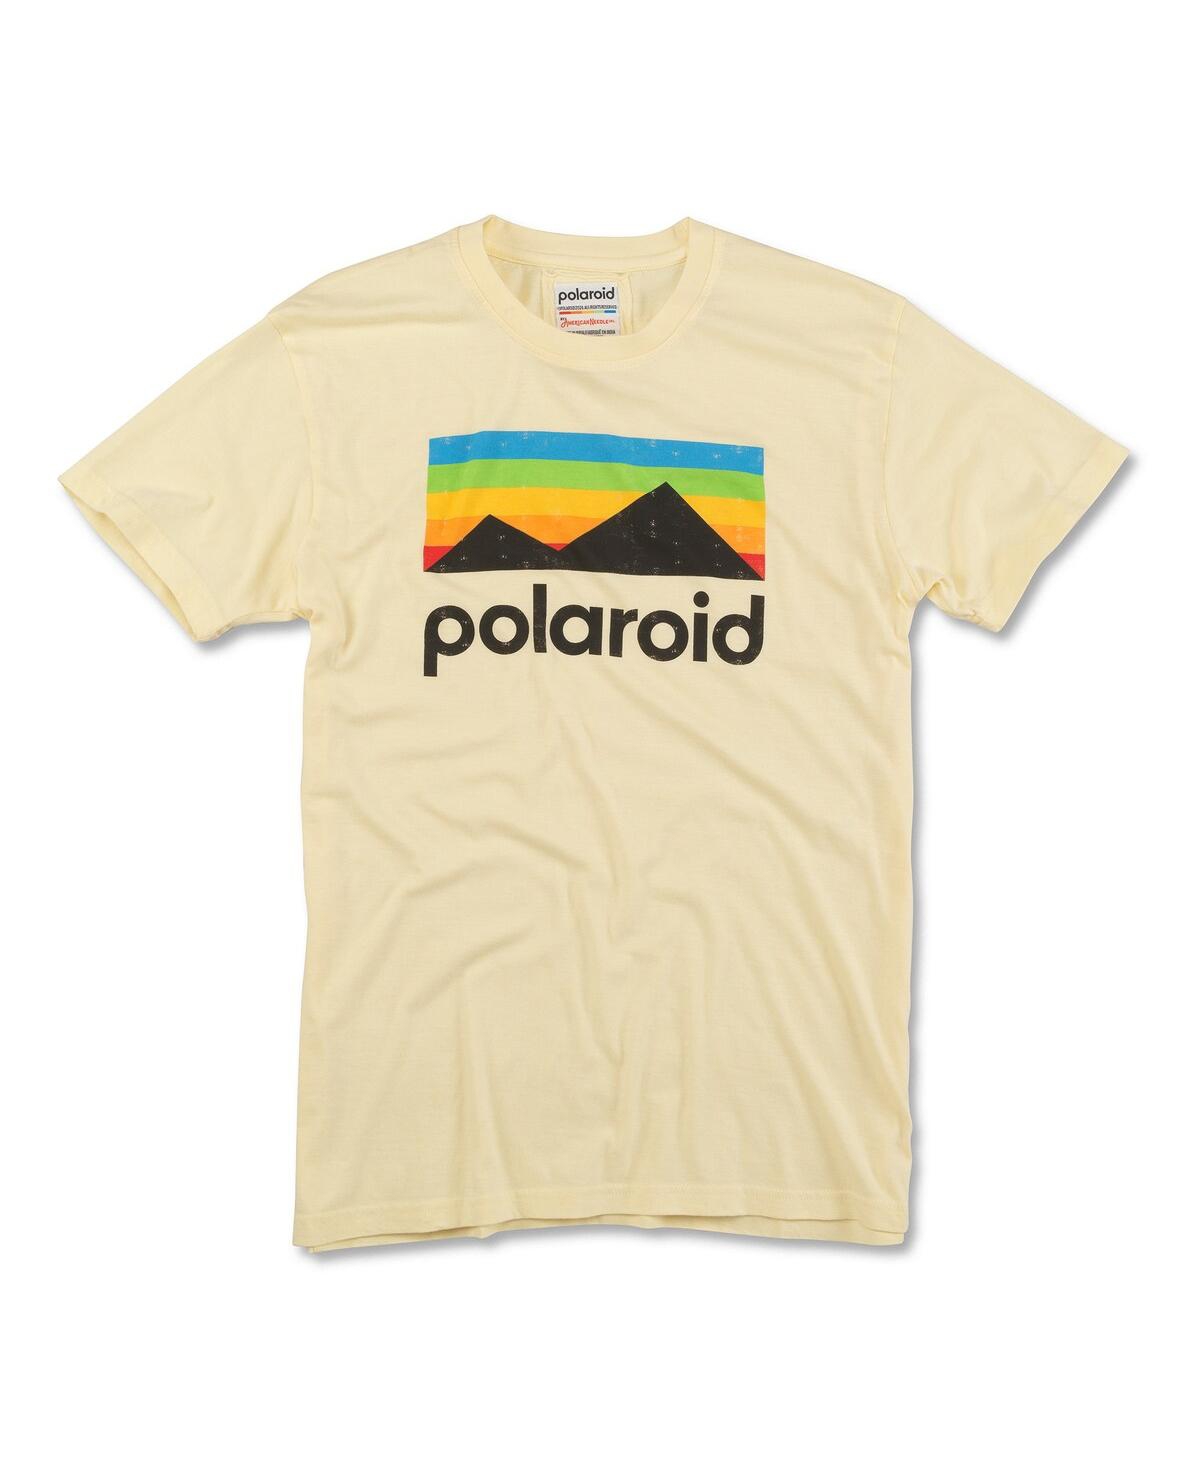 American Needle Men's And Women's Yellow Polaroid Brass Tacks T-shirt